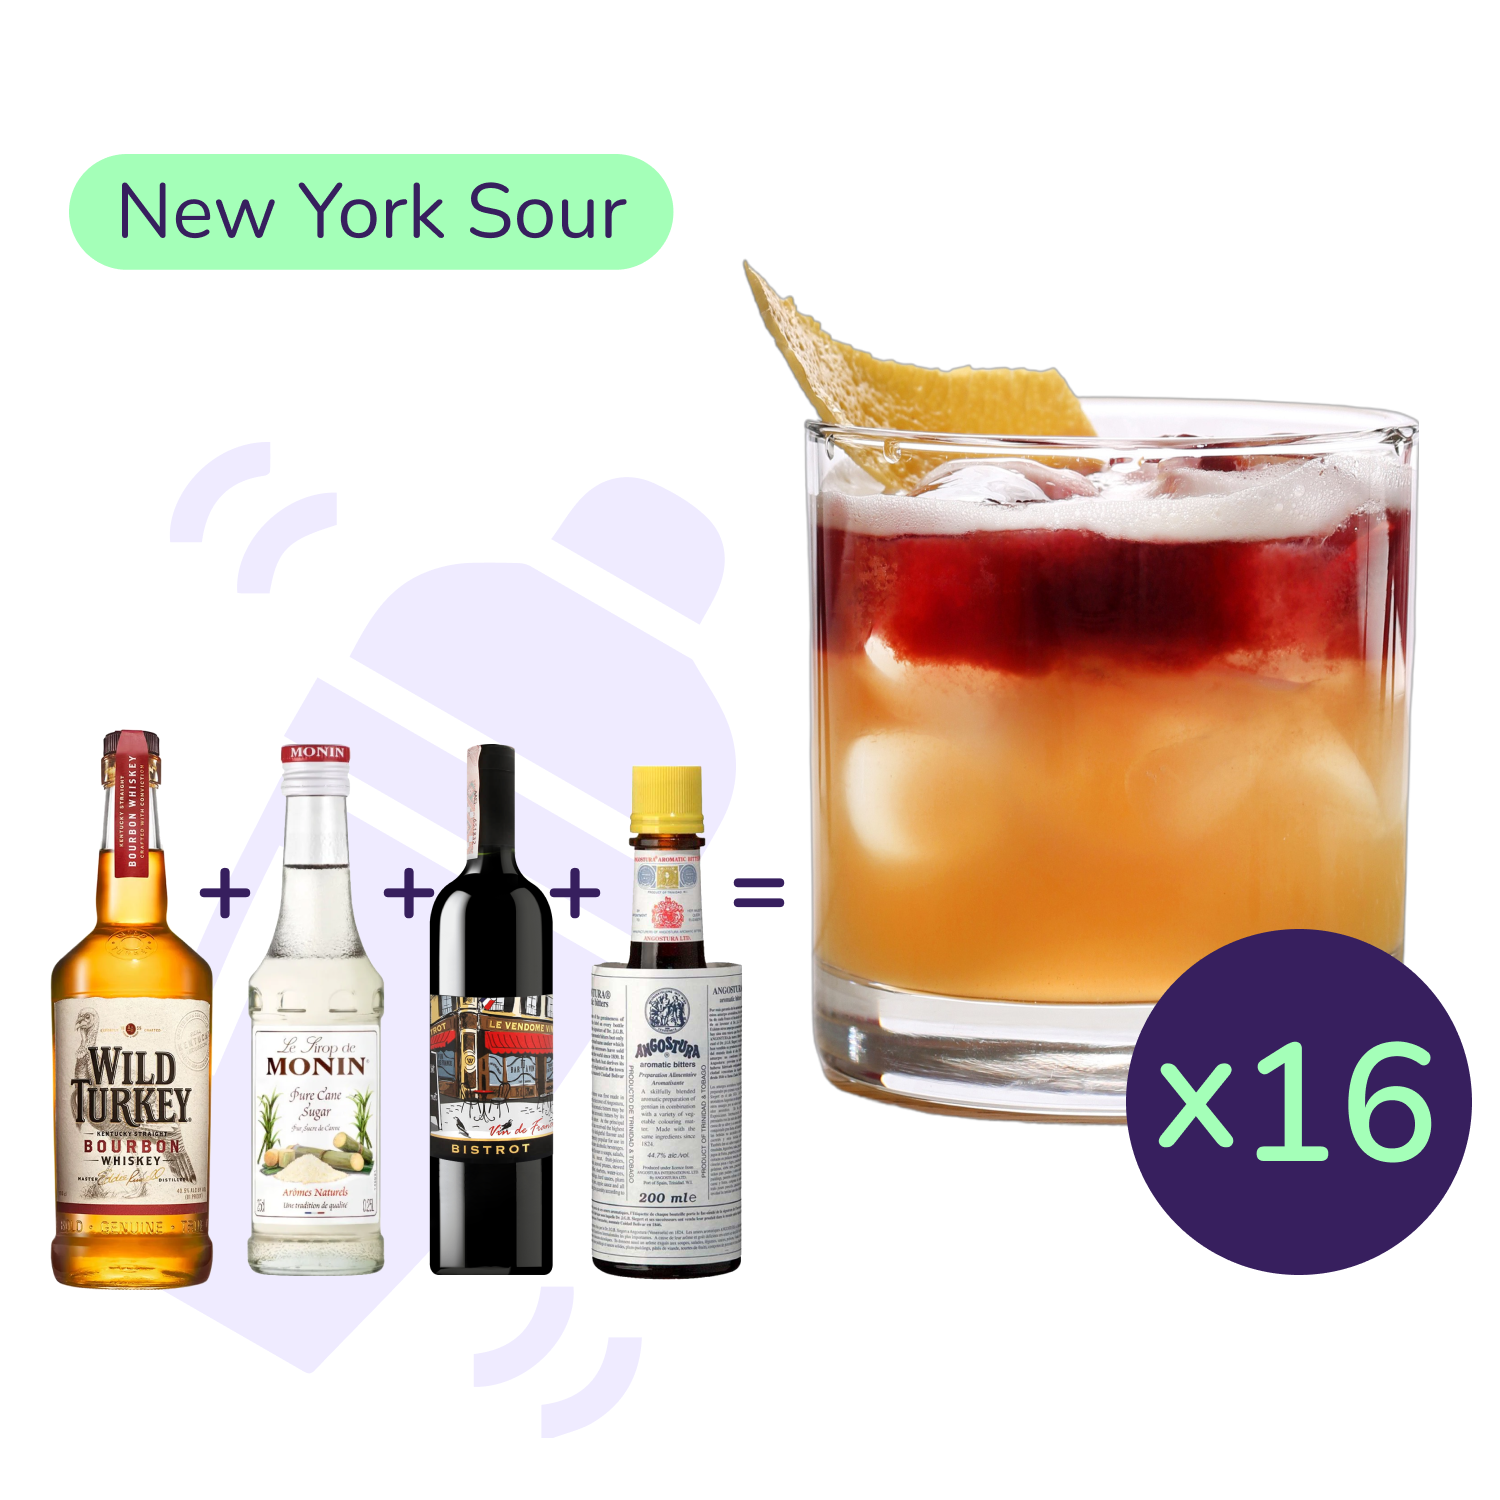 Коктейль New York Sour (набор ингредиентов) х16 на основе Wild Turkey - фото 1